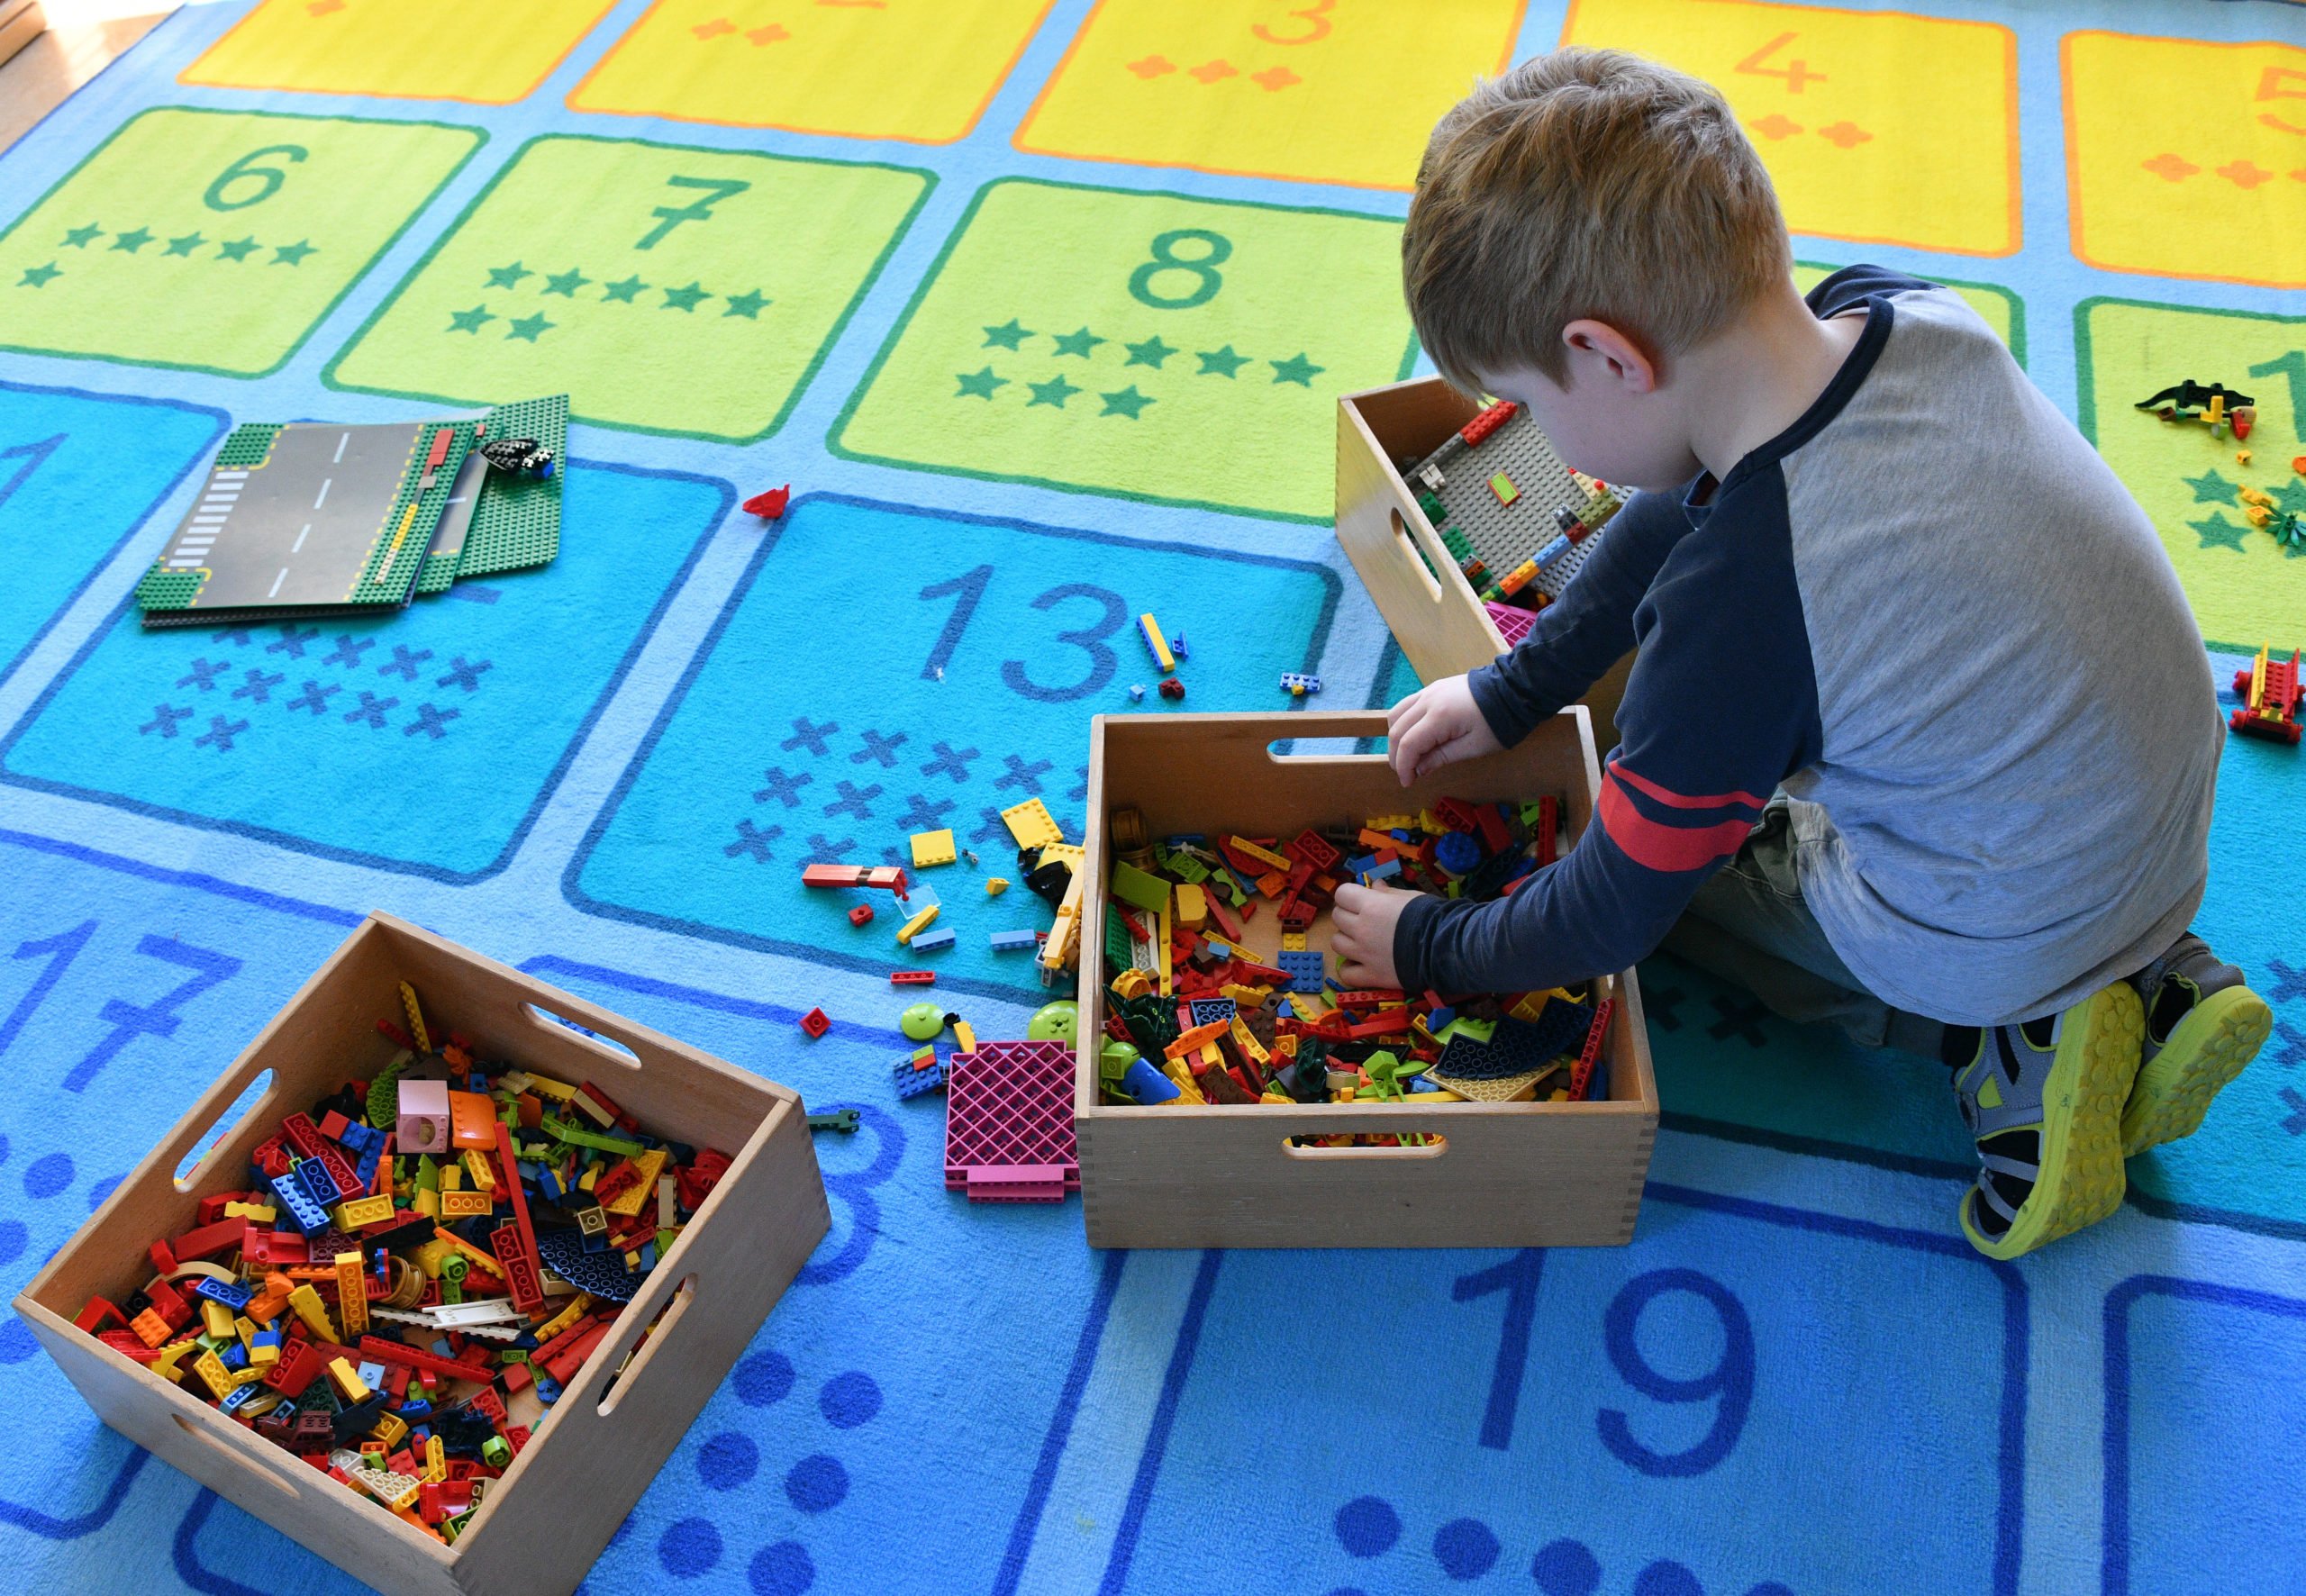 A young boy plays with bricks in a nursery school in Potsdam